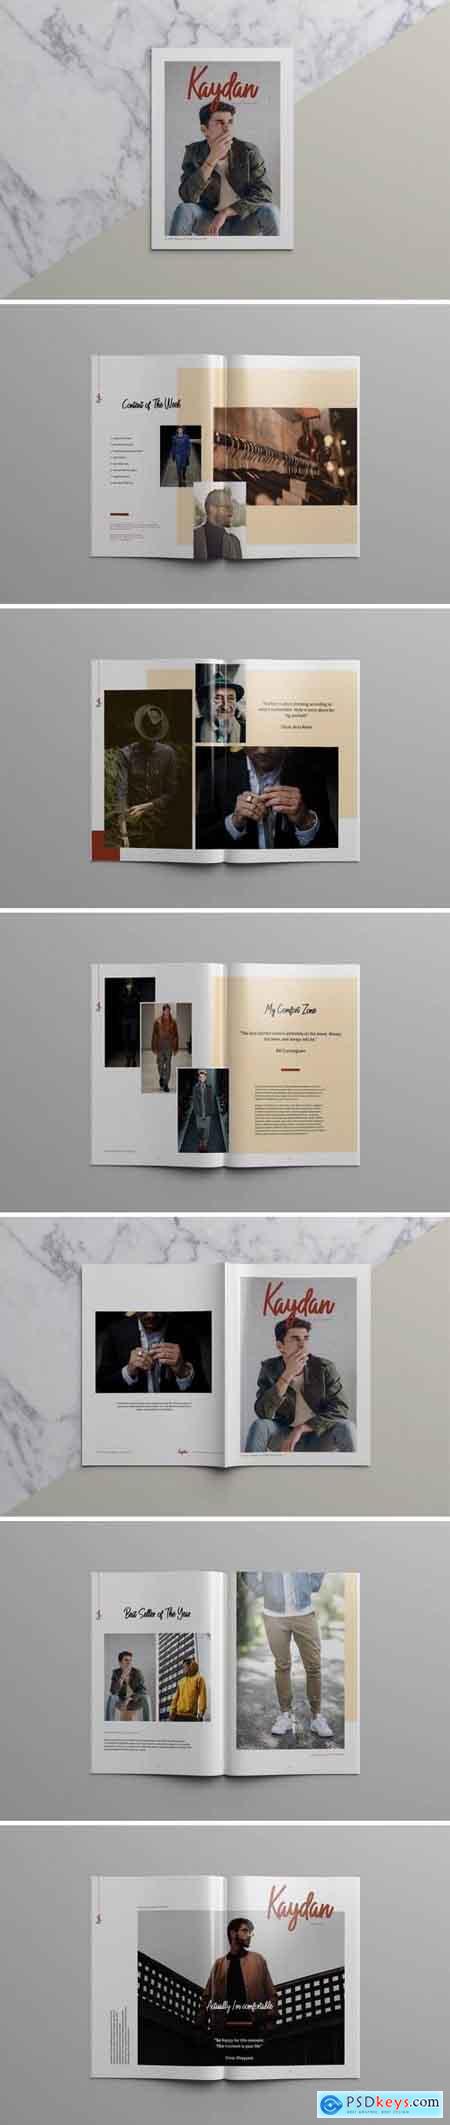 KAYDAN - Fashion Lookbook & Magazine